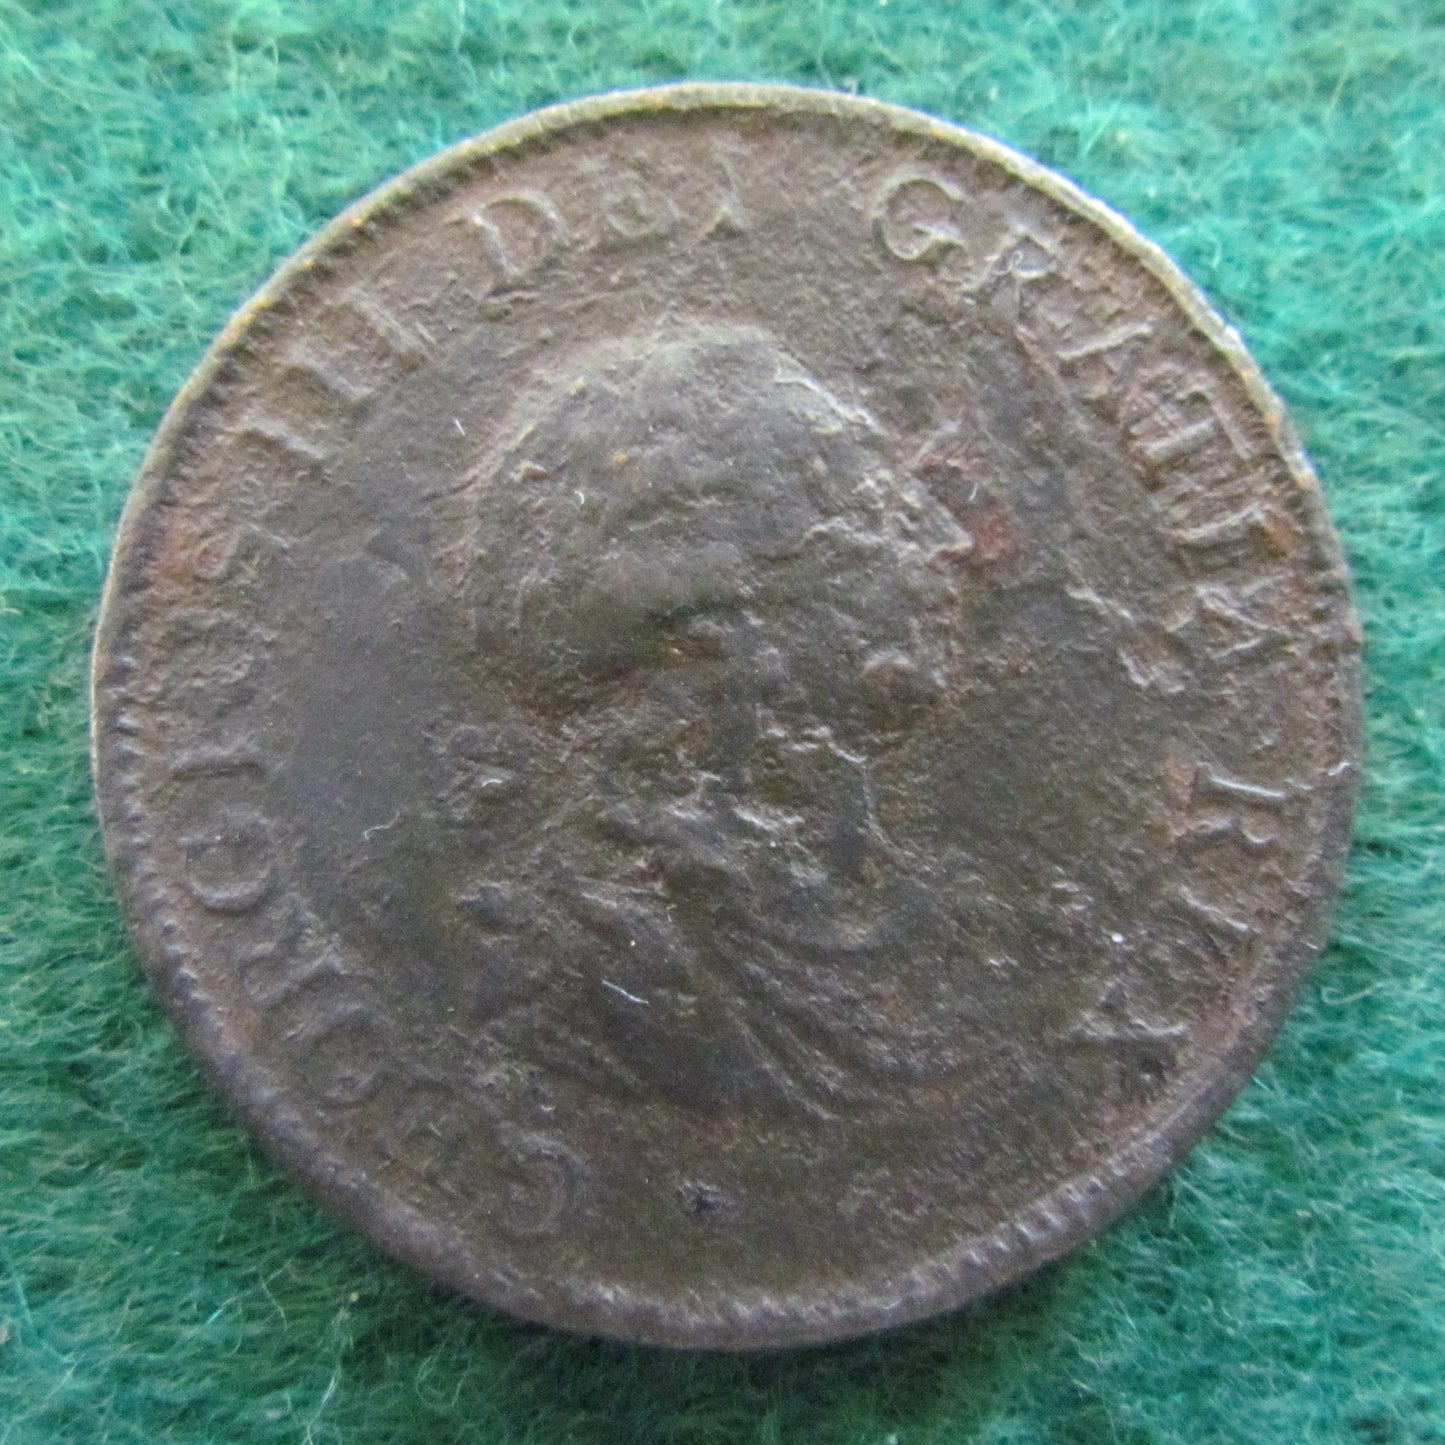 GB British UK English 1799 Half Penny King George III Coin - Circulated